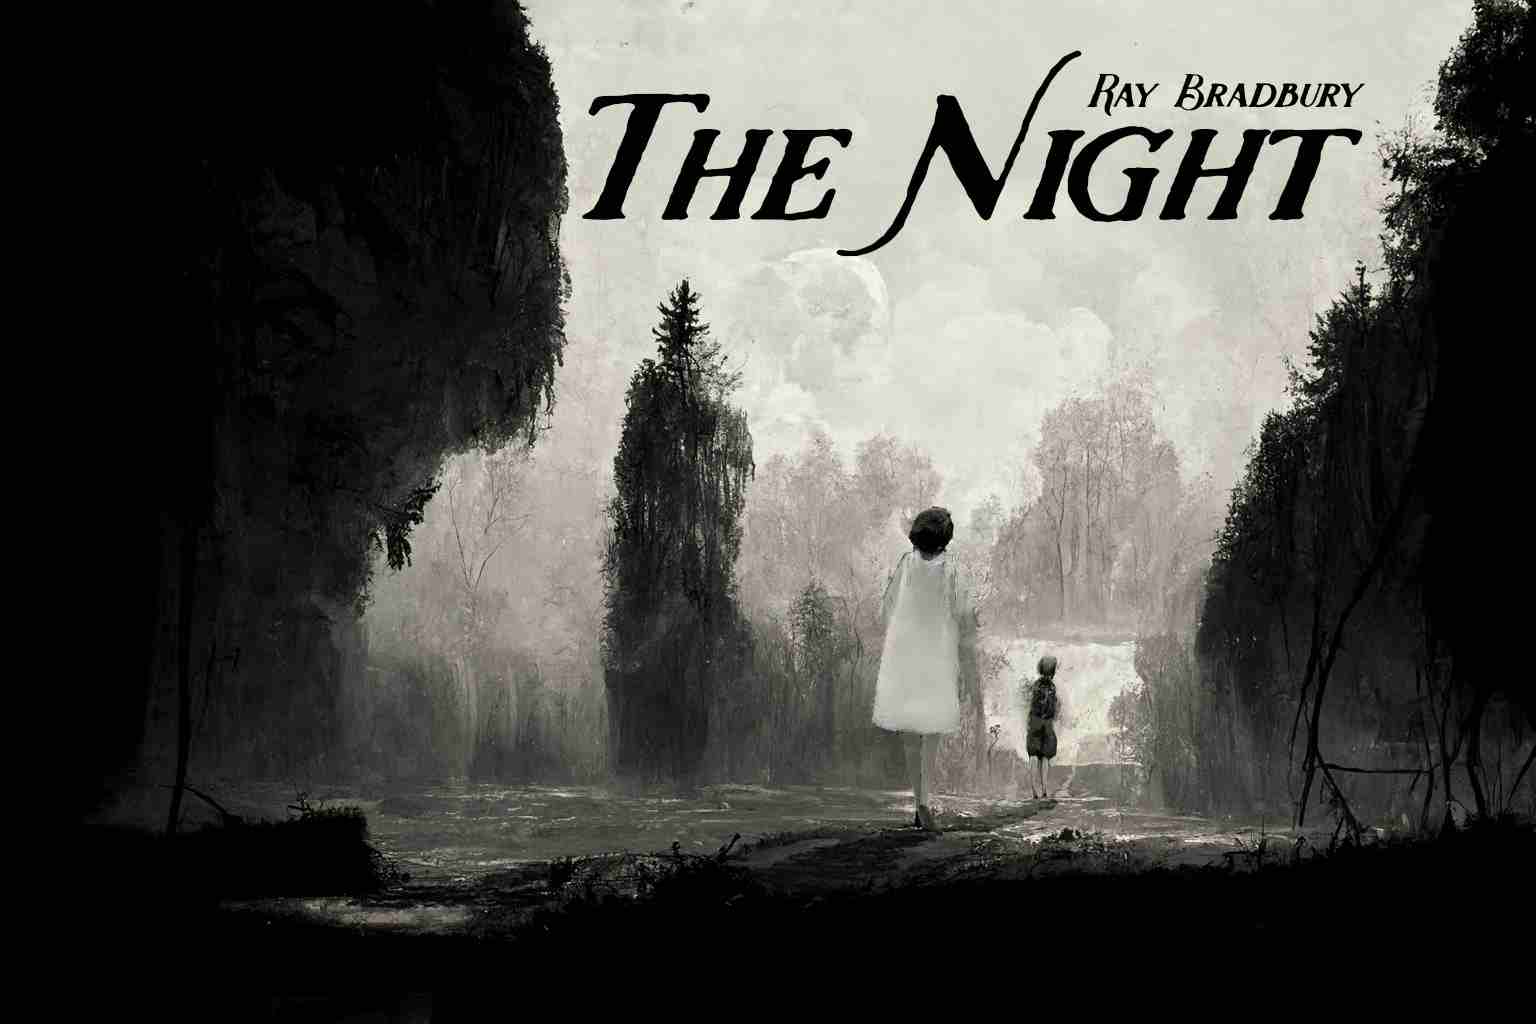 The Night by Ray Bradbury Short Story Analysis